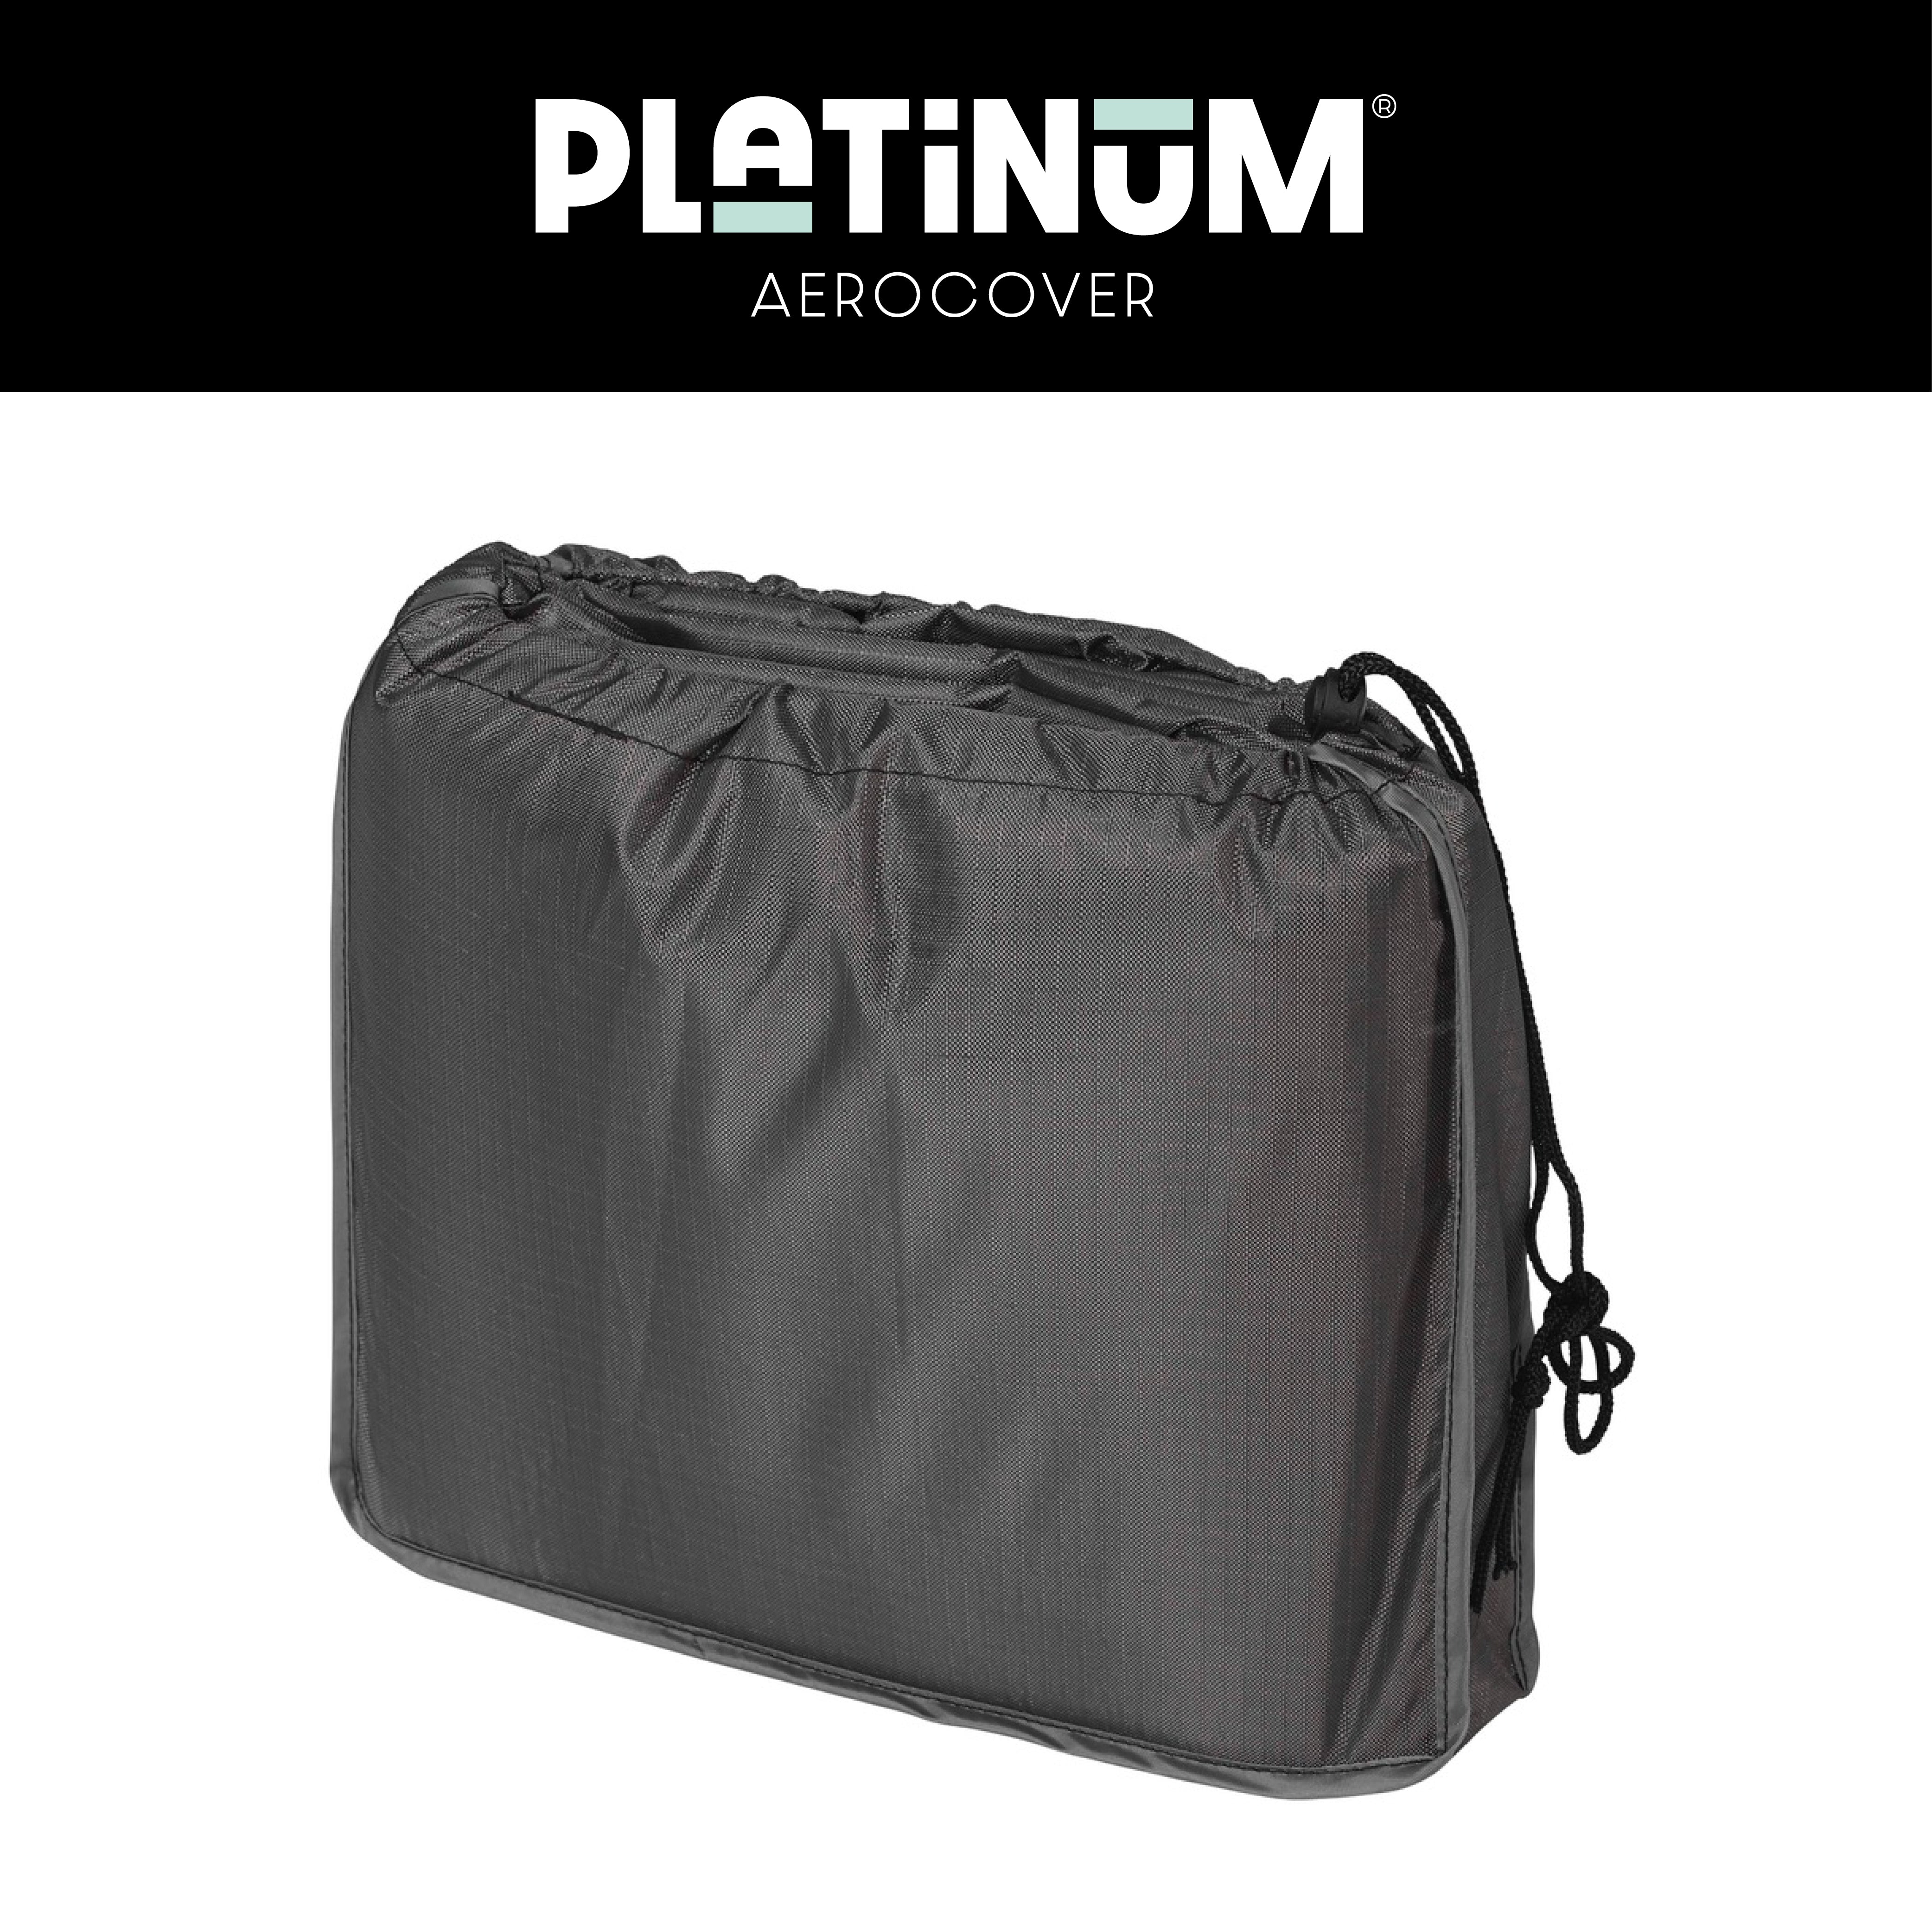 Platinum Loungeset platformhoes 255x255x90xH30/45/70